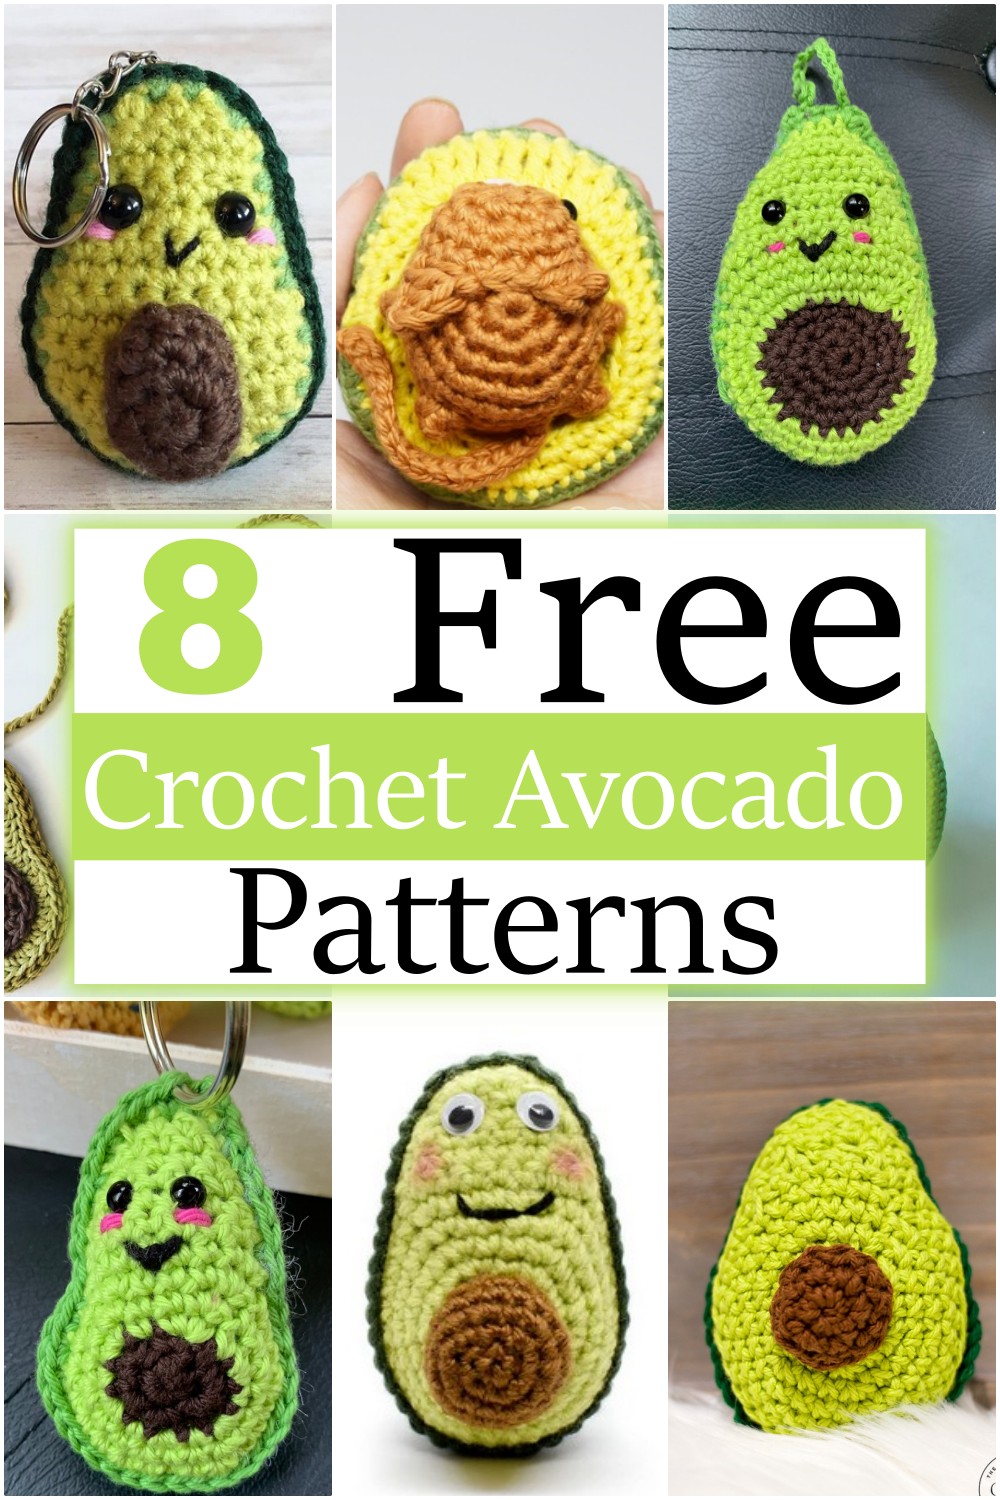  Free Crochet Avocado Patterns